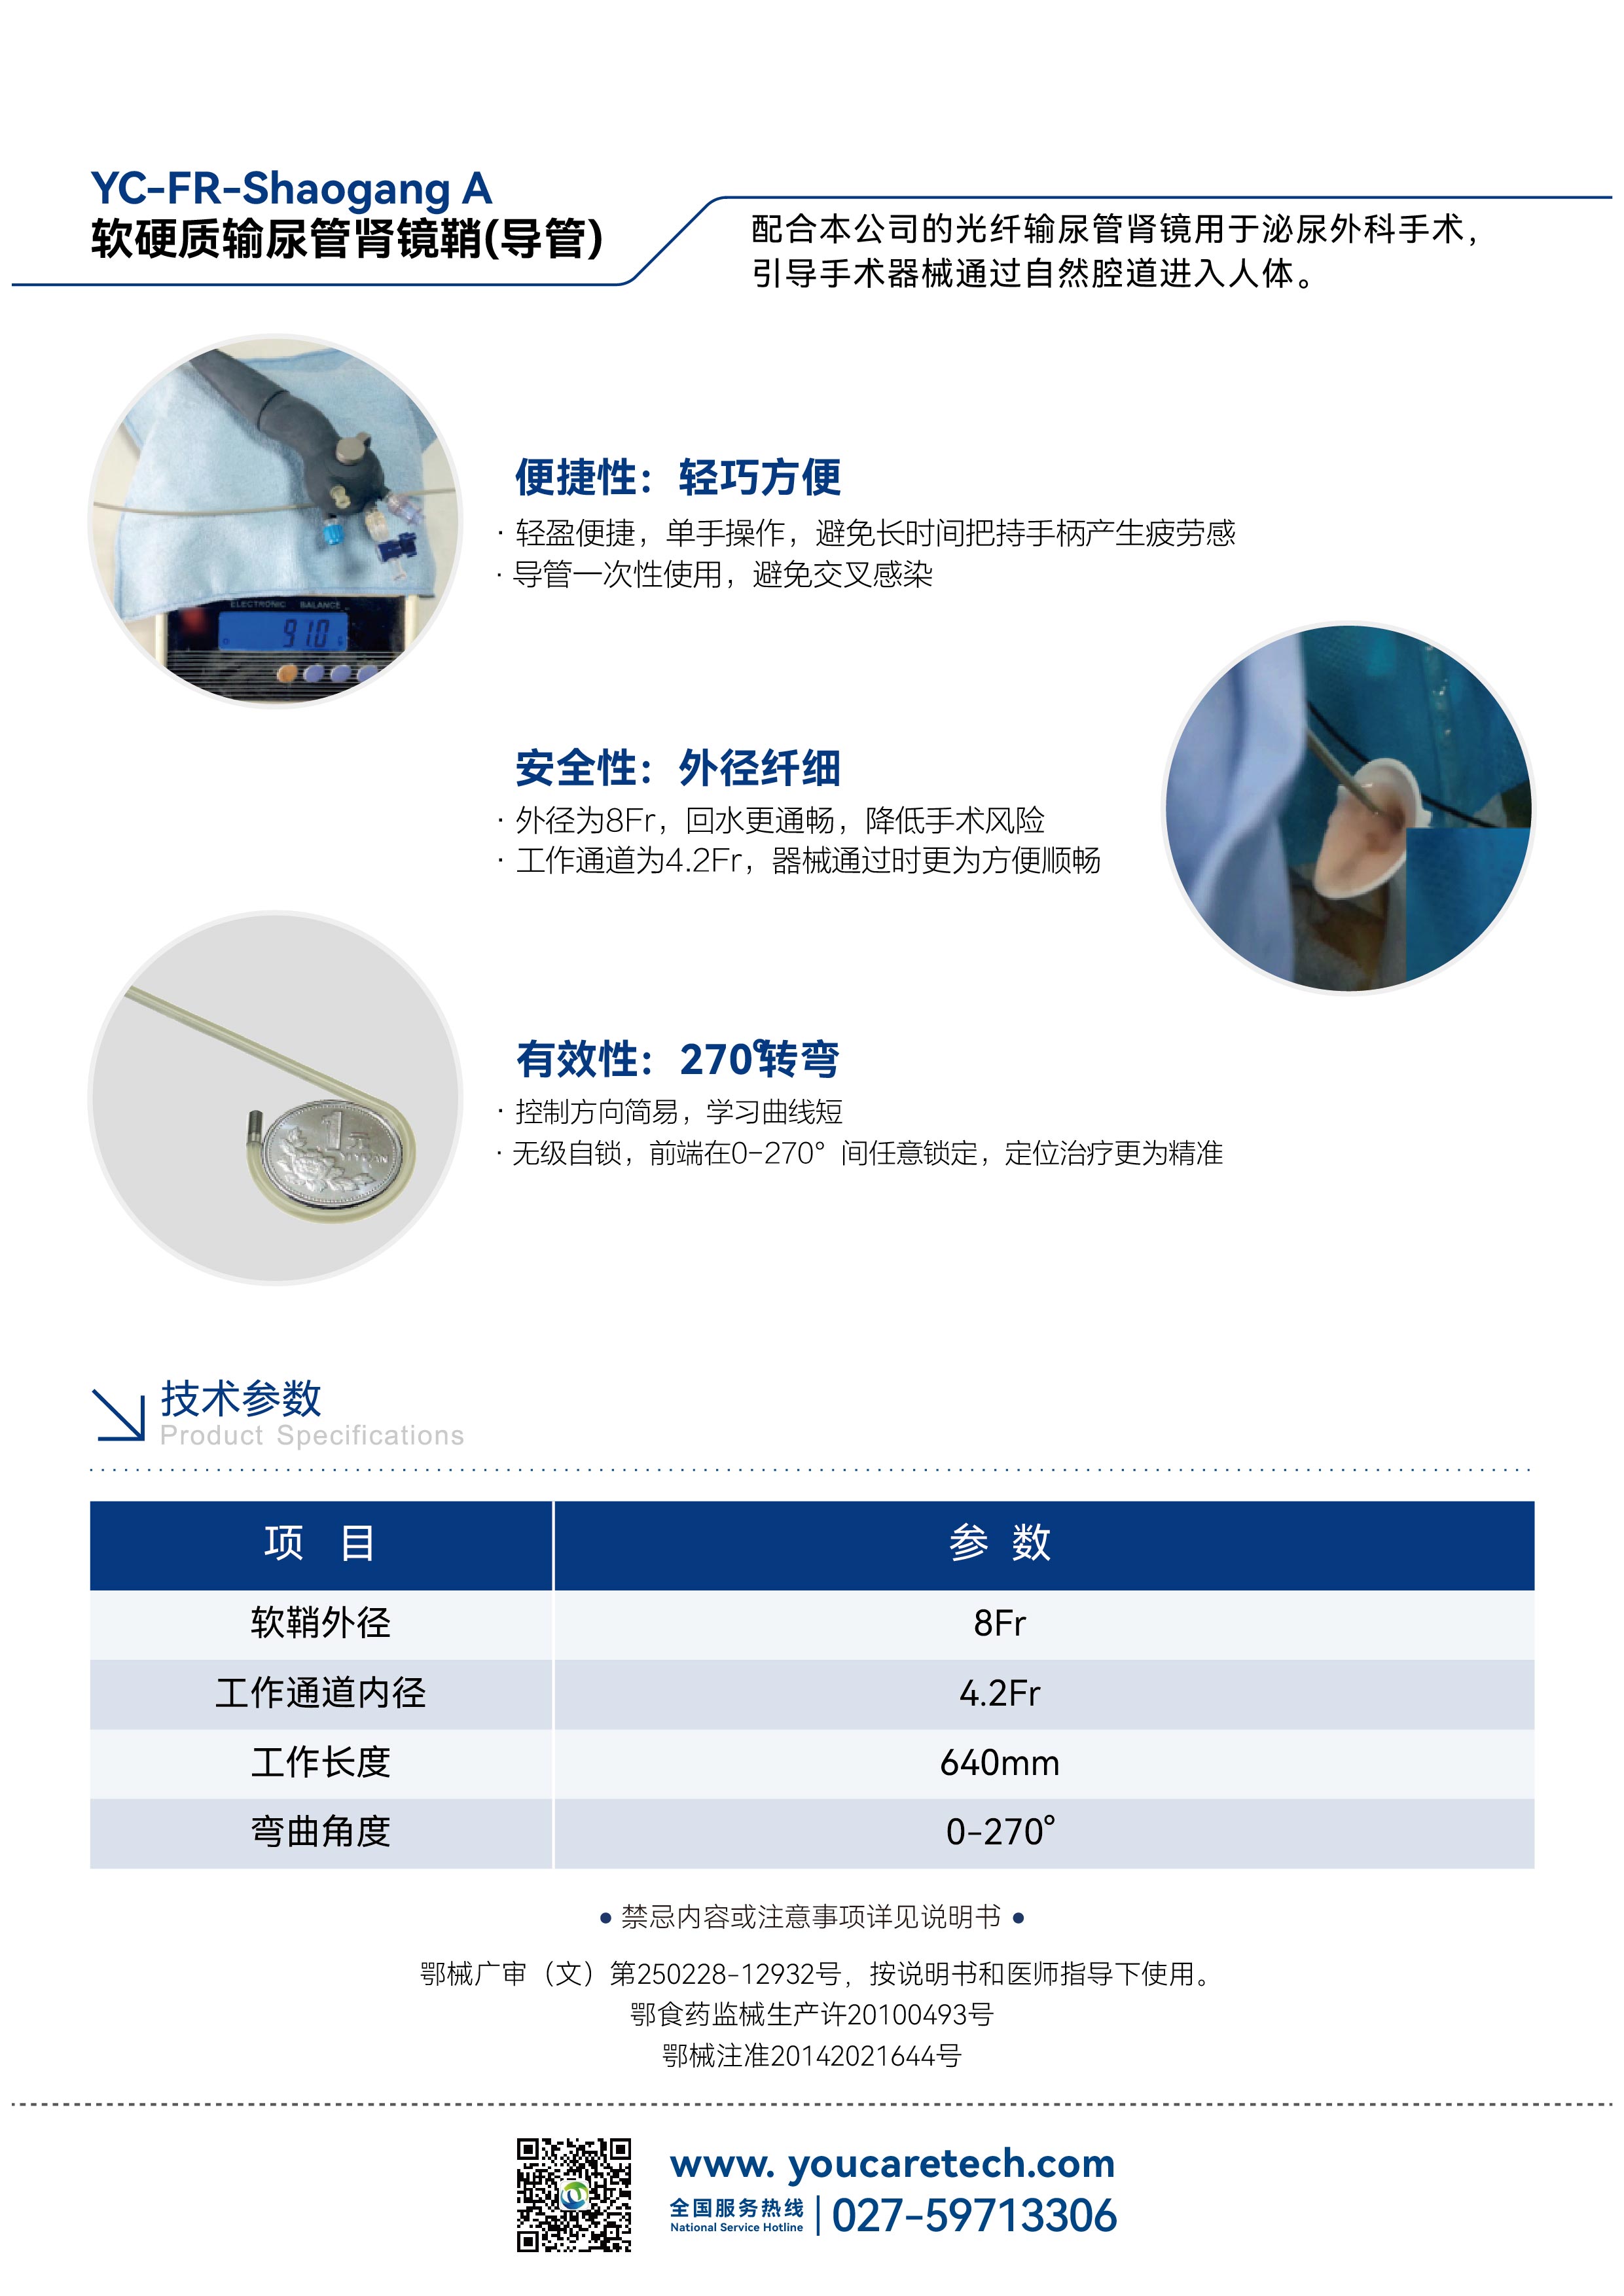 Ureterorenoscope Catheter YC-FR-shaogang A